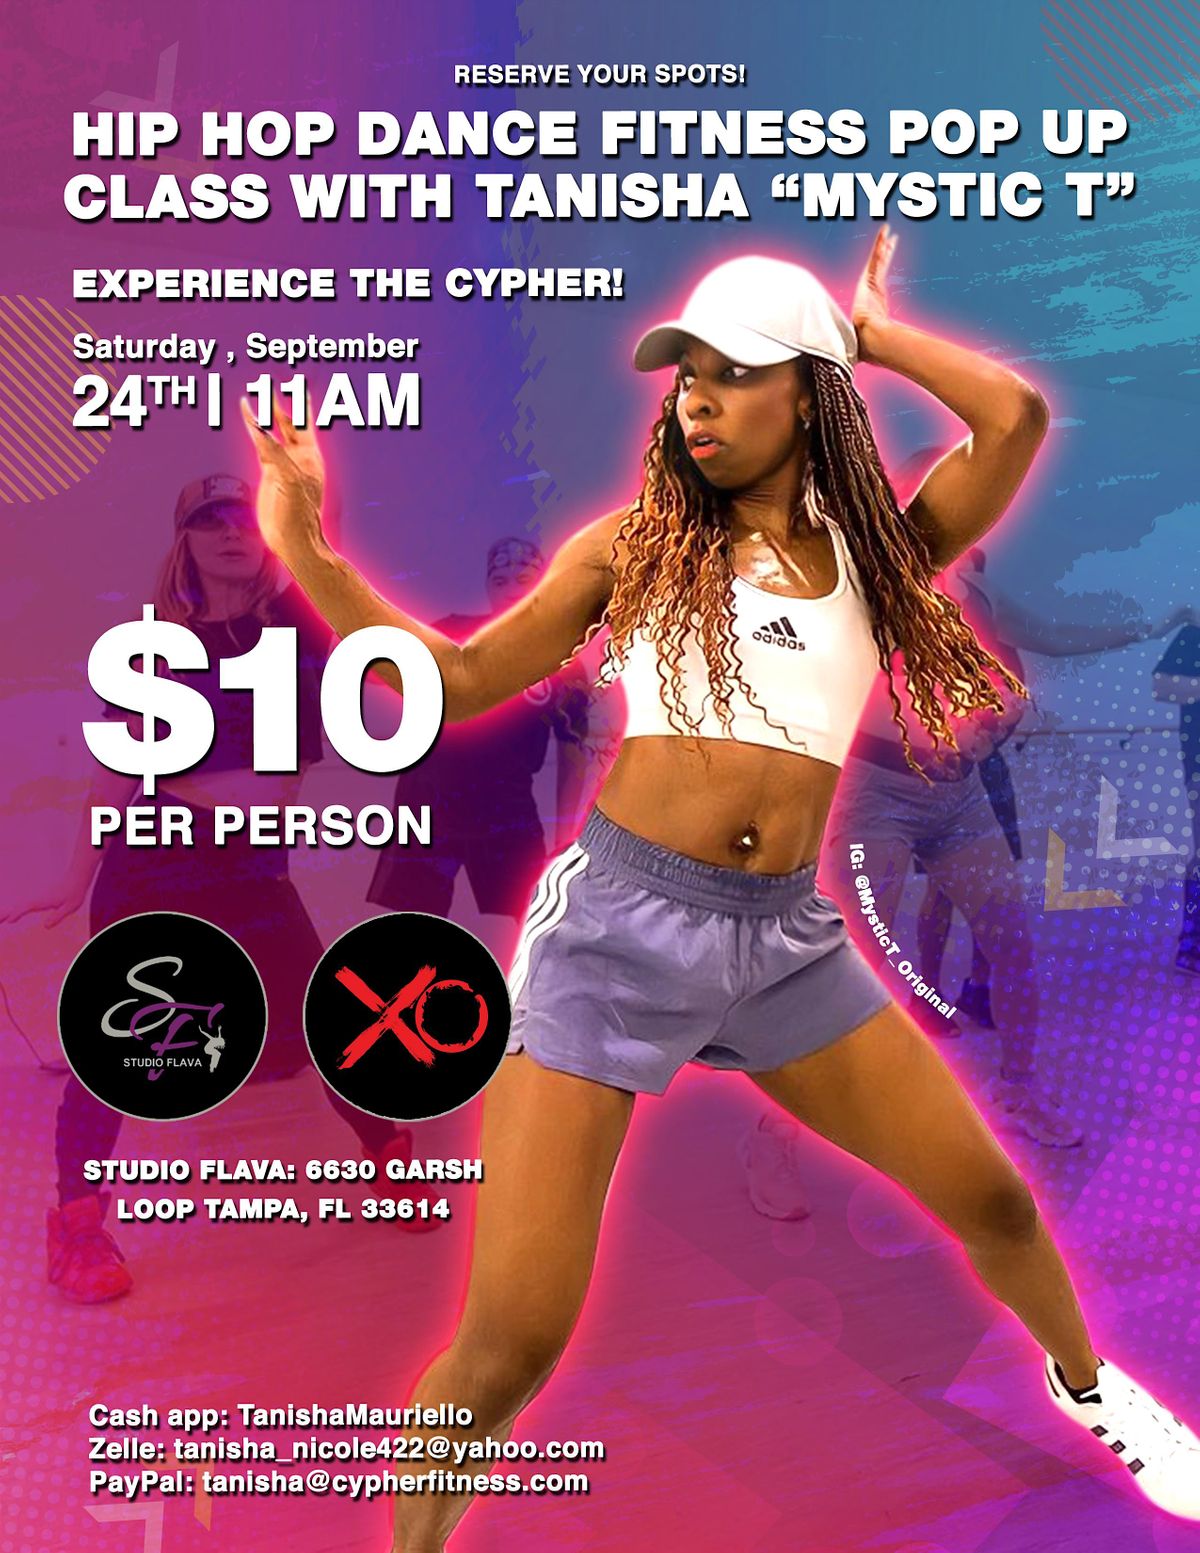 Hip Hop Dance Fitness Pop up Class with Mystic T!